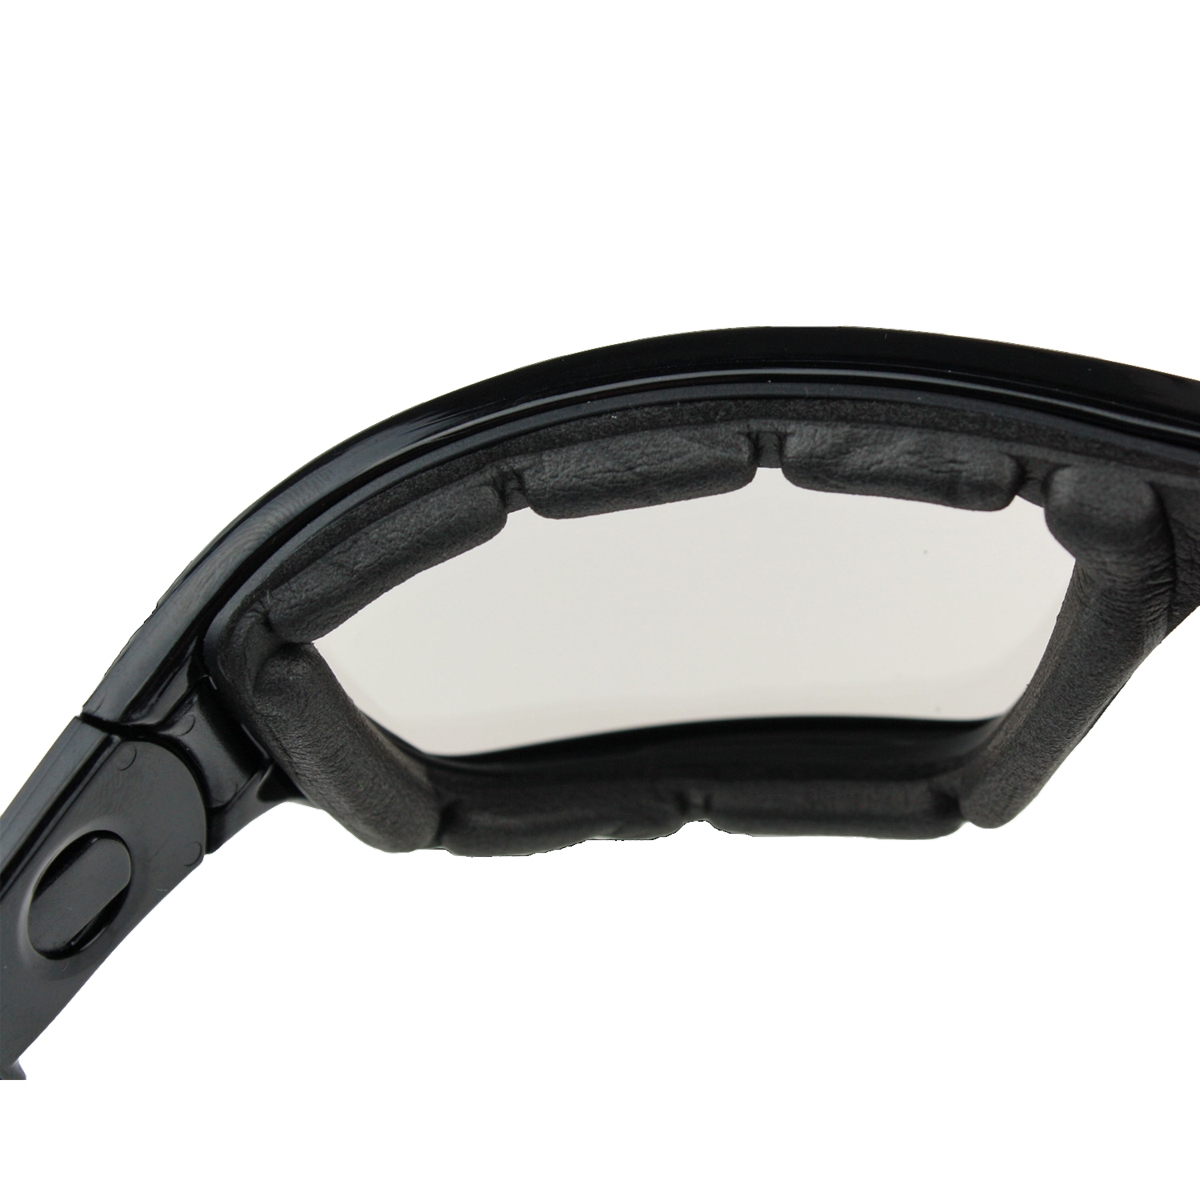 Black Frame Smoke Anti-Fog Lens DPG83-21D DeWalt DPG83-21 Converter Safety Glasses/Goggles 